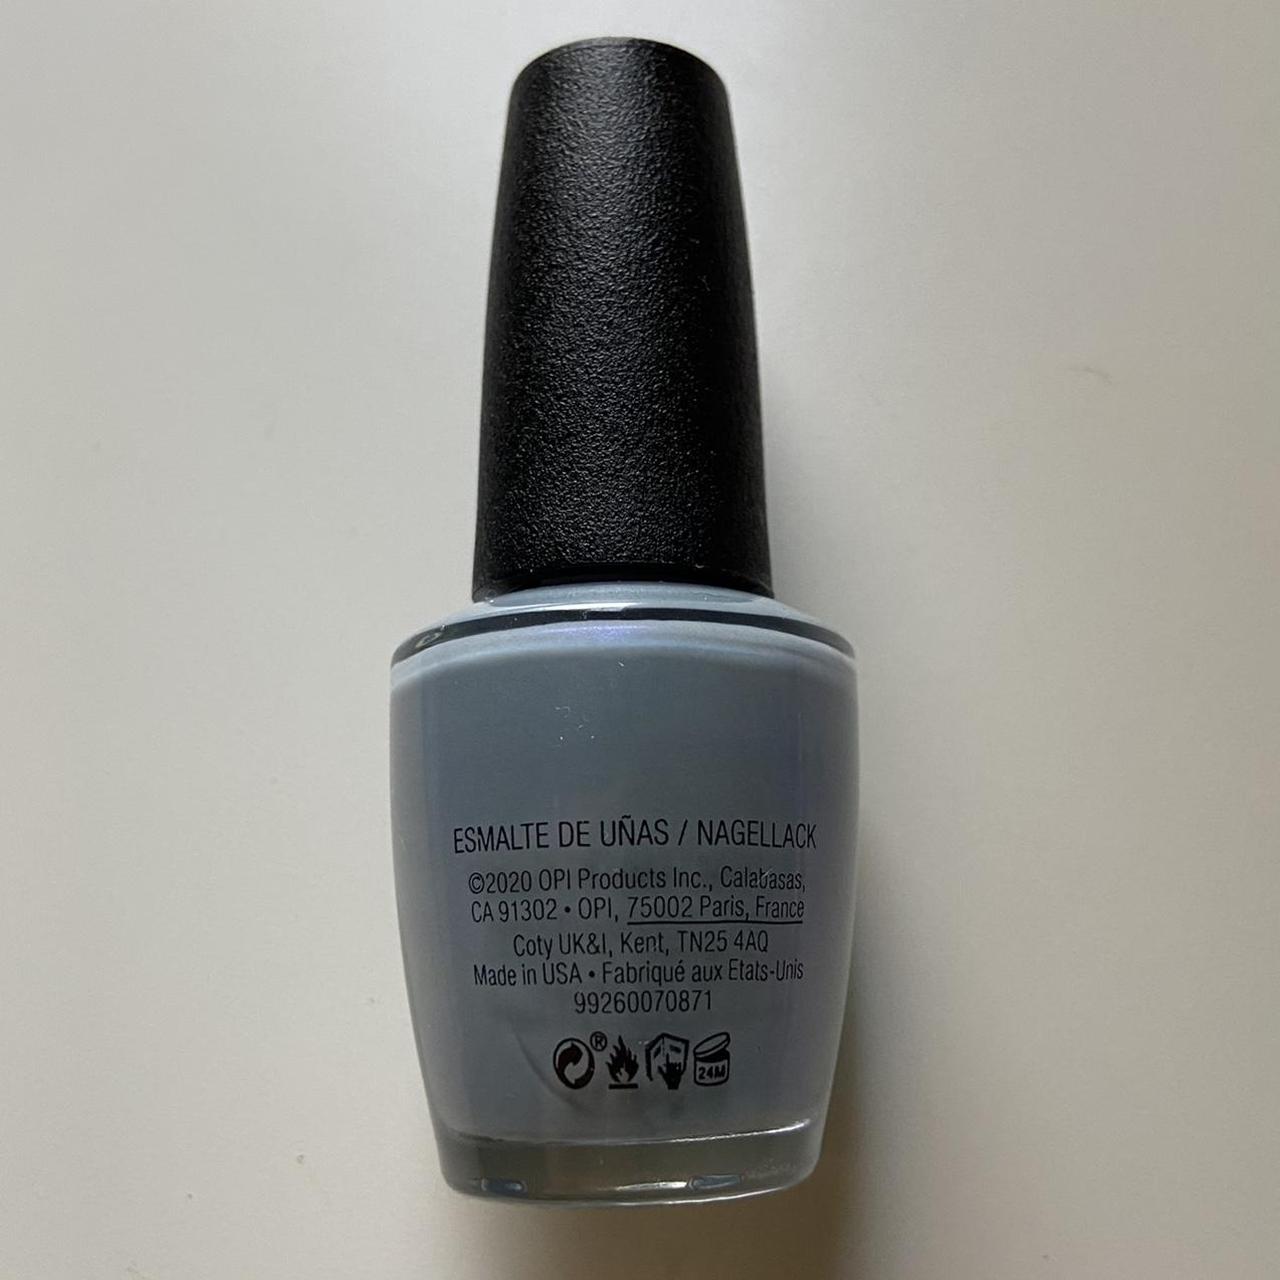 Product Image 2 - O.P.I Blue Nail Polish

- Used